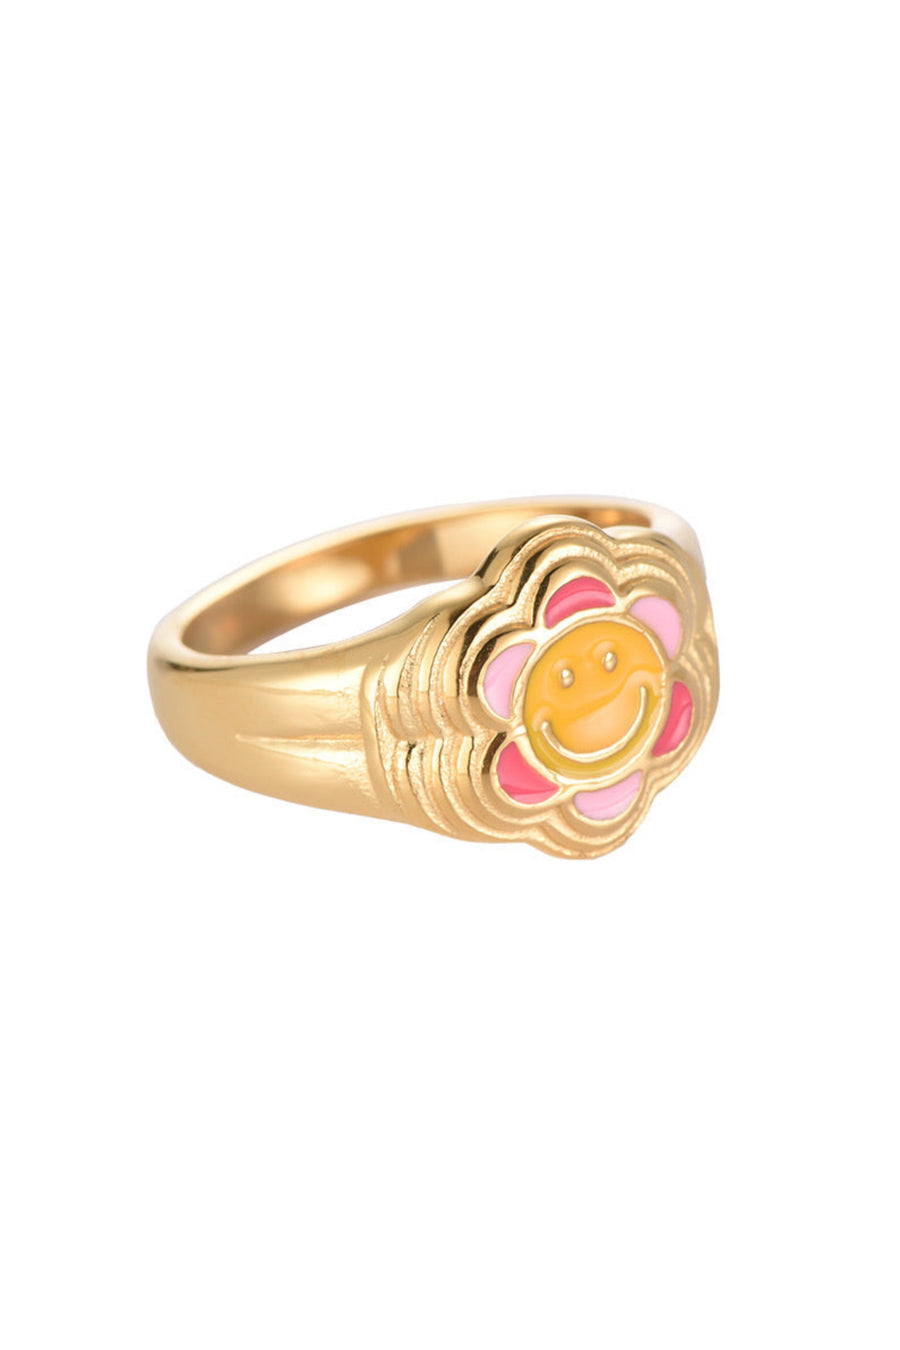 CMA x Goldfox Sunny Smile Ring